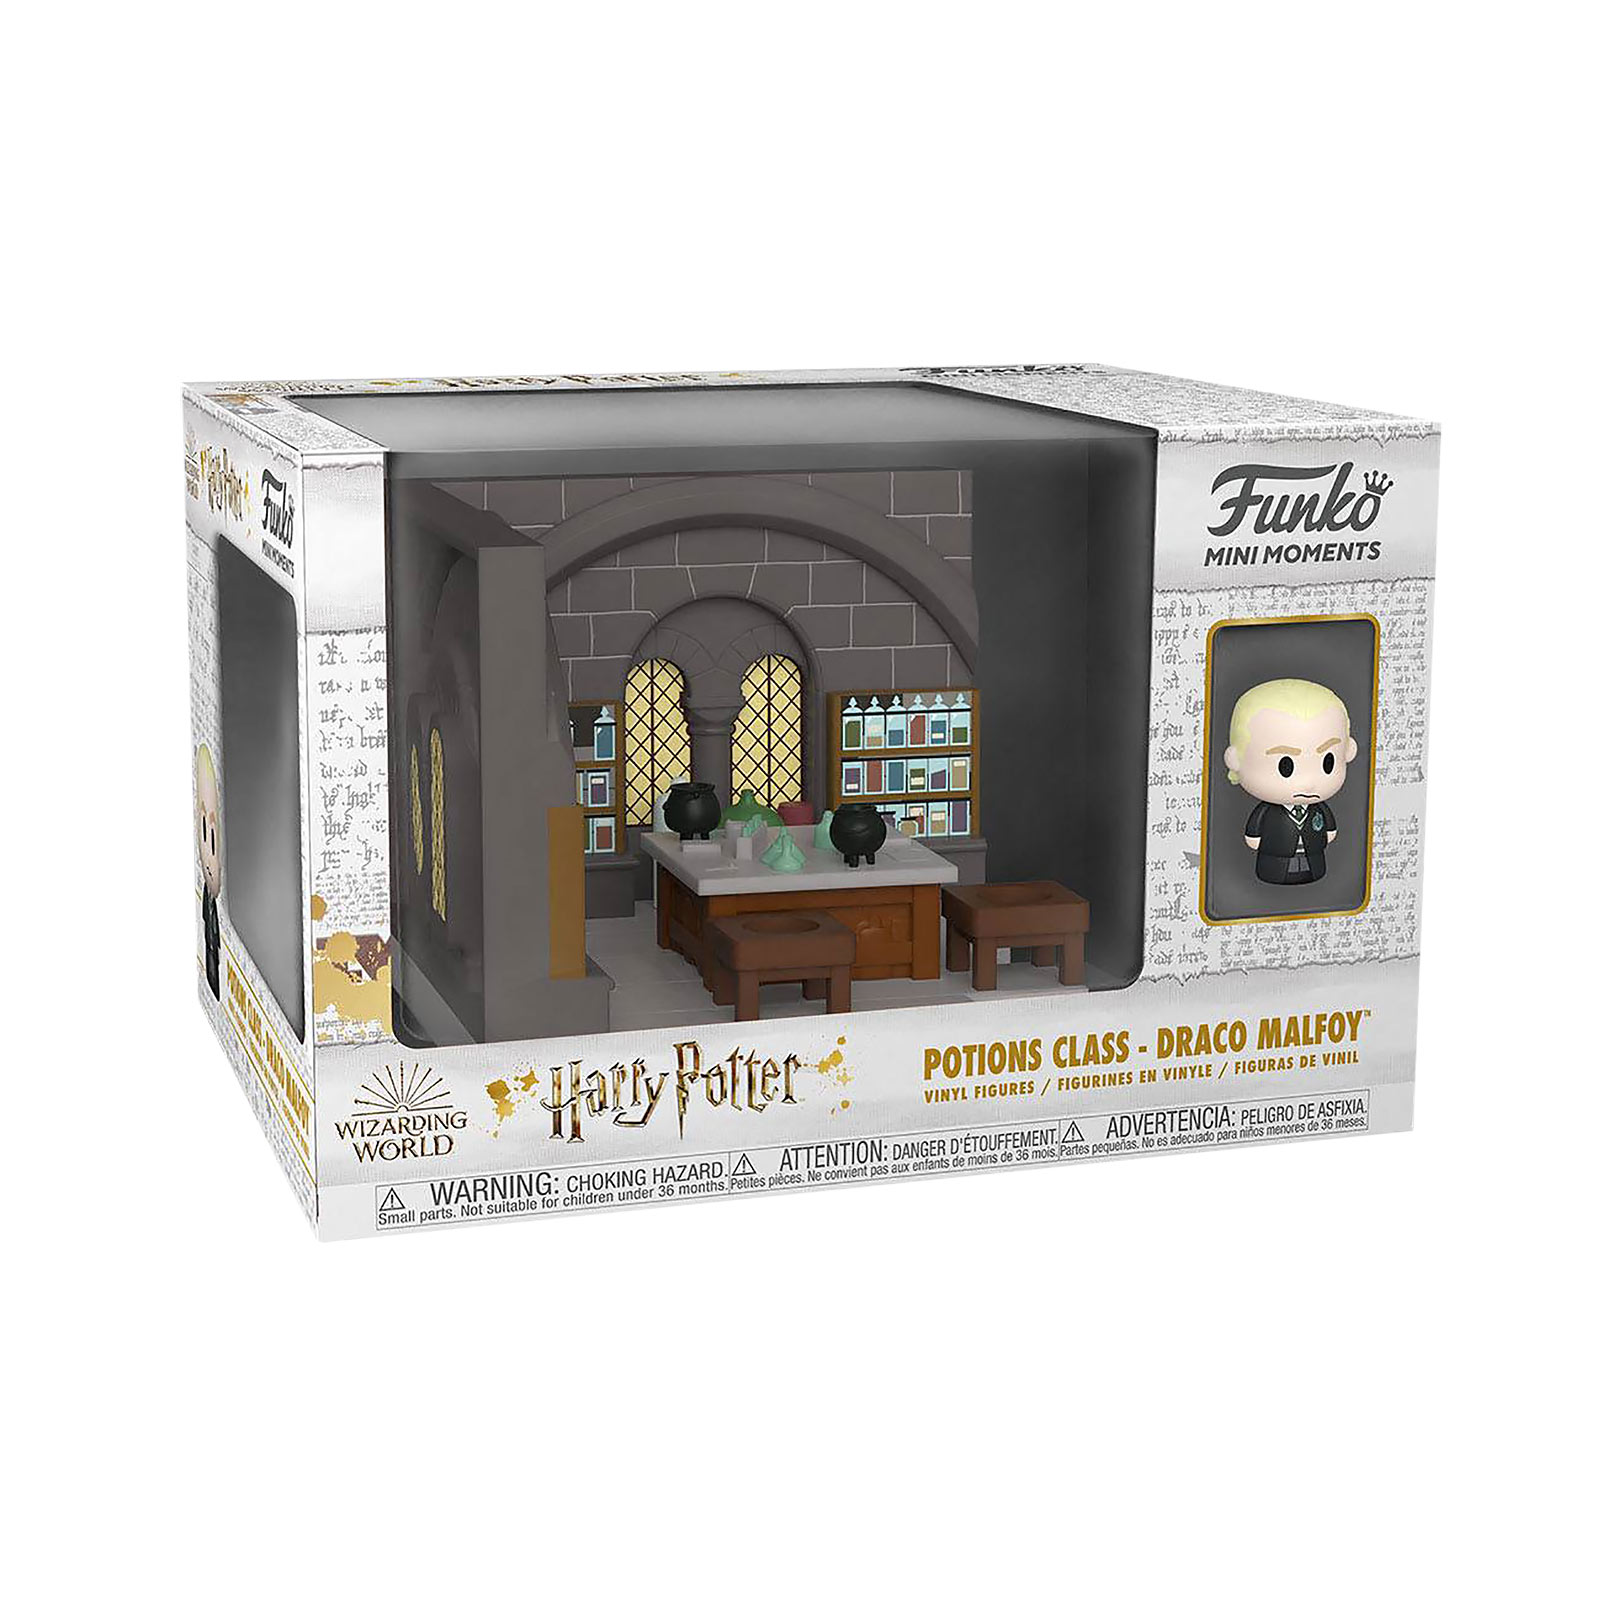 Figurine Draco Malfoy Potion Class Funko Pop Mini Moments - Harry Potter